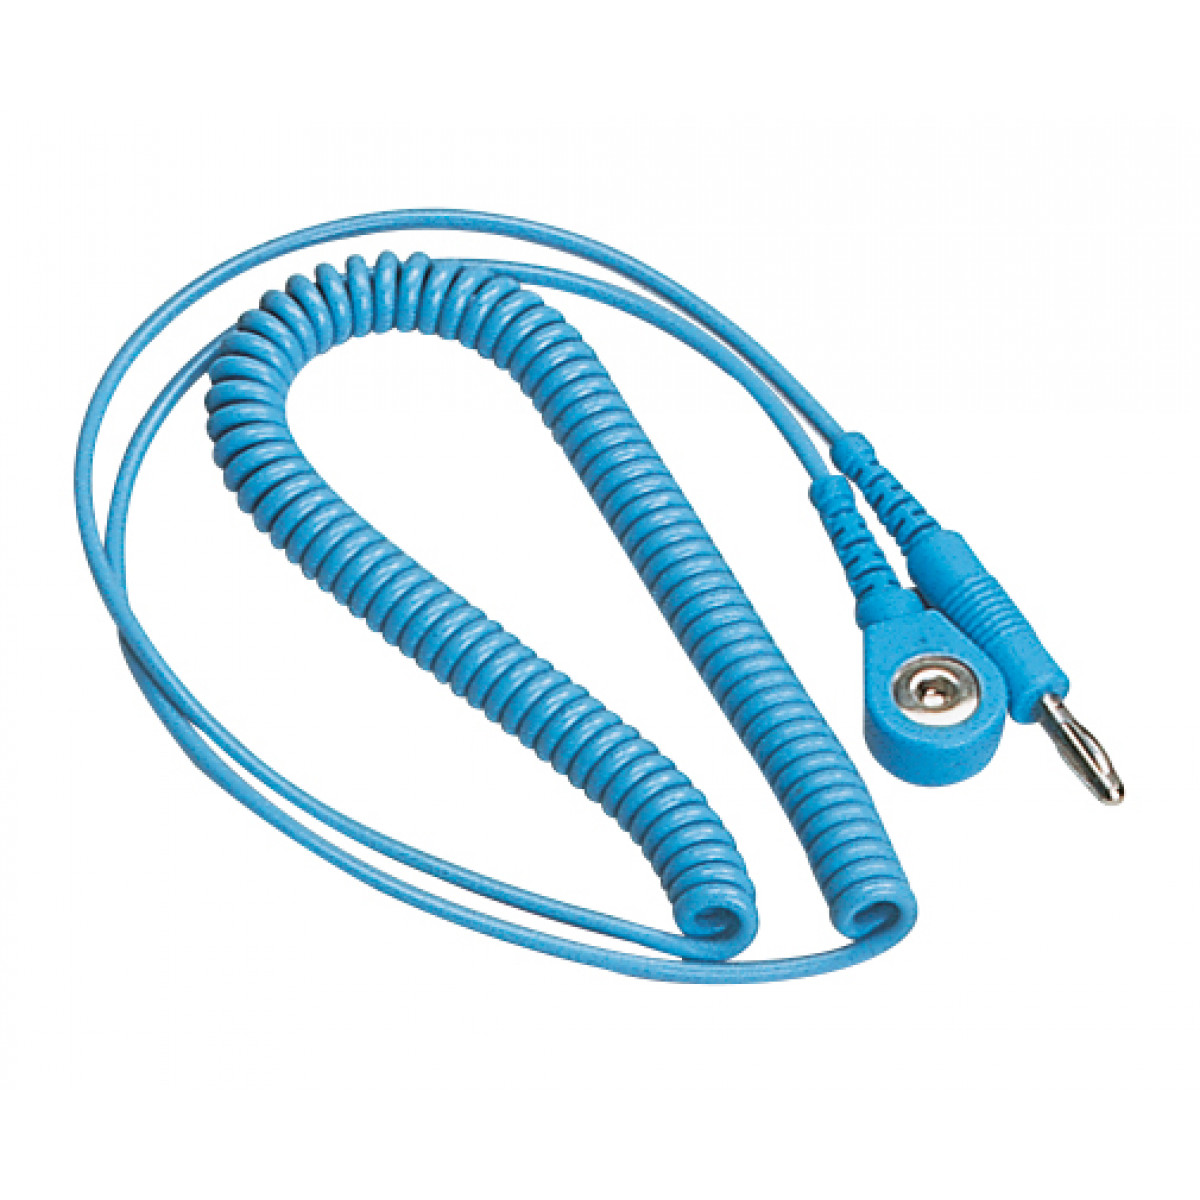 ESD spiral cable with push button & banana plug